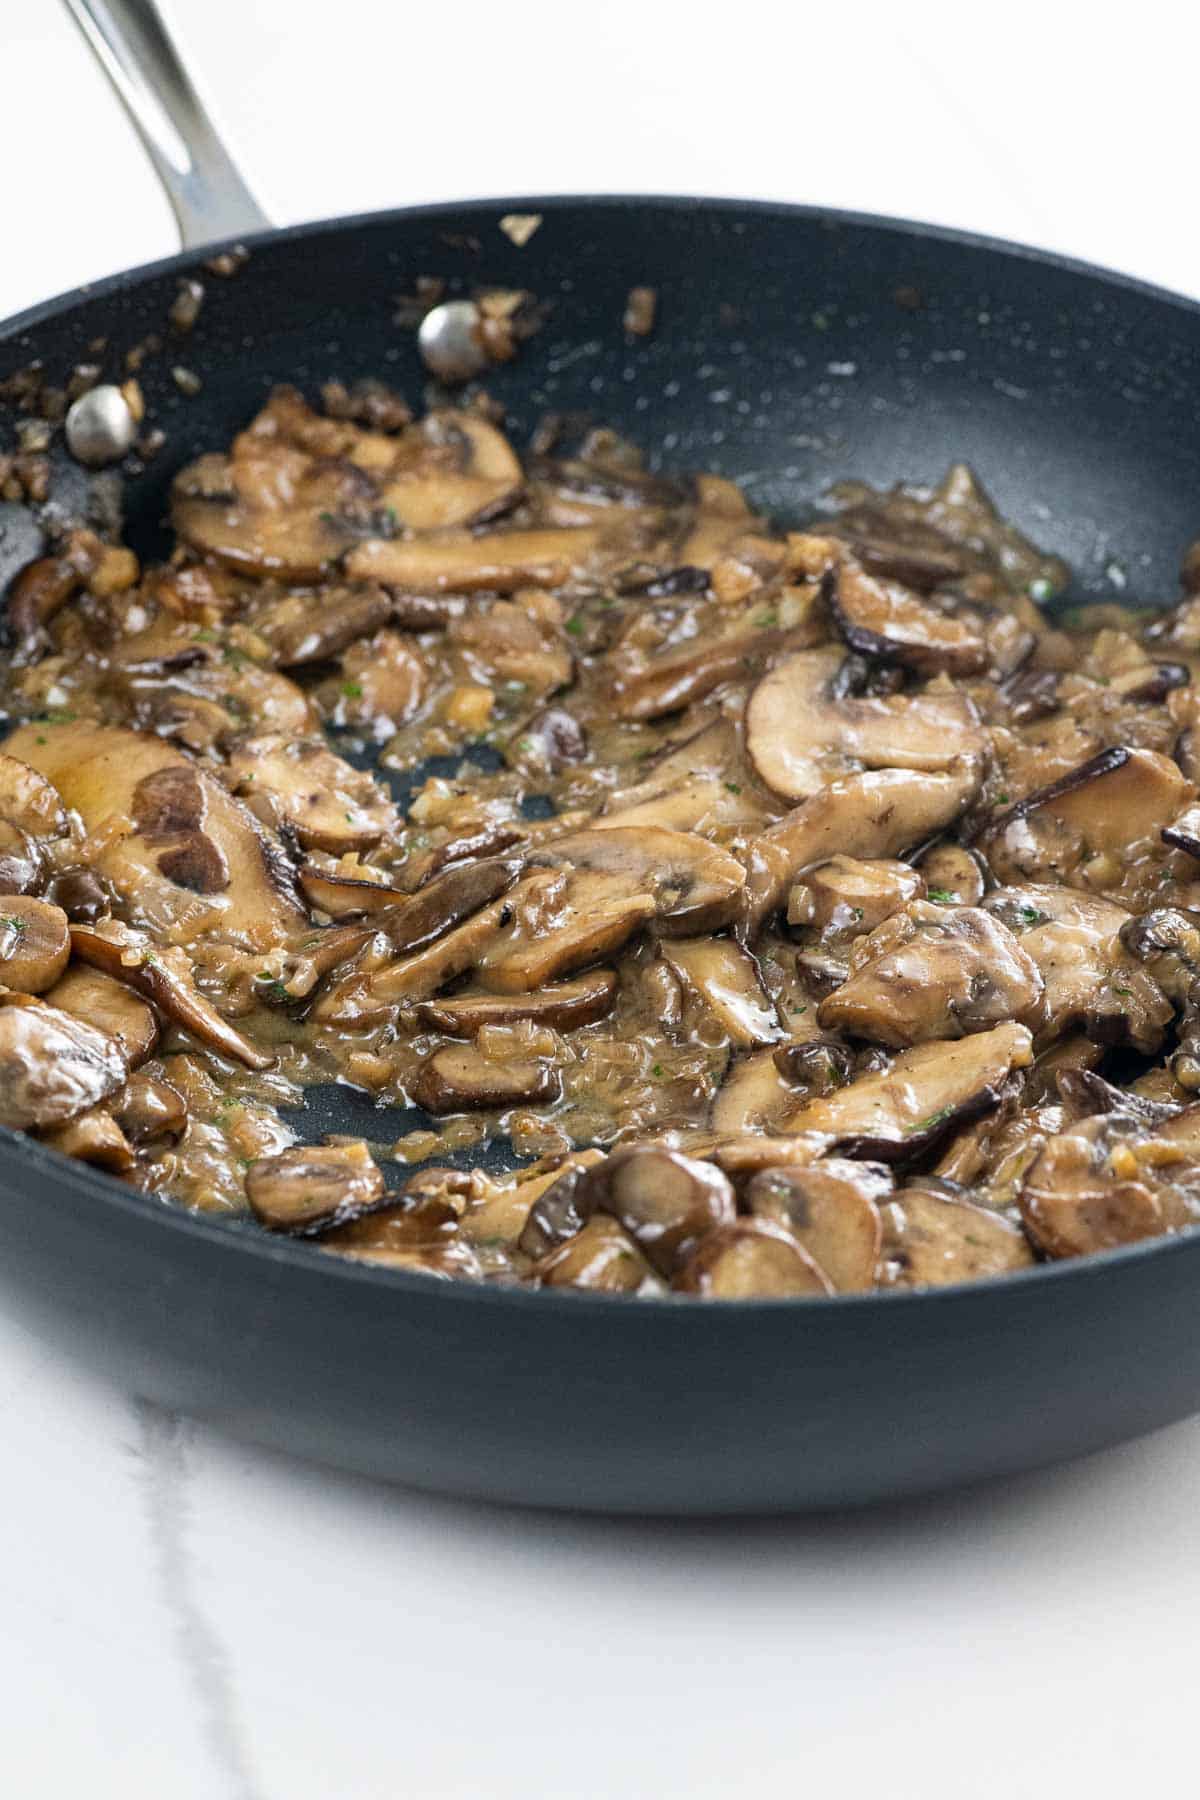 marsala mushrooms in a pan